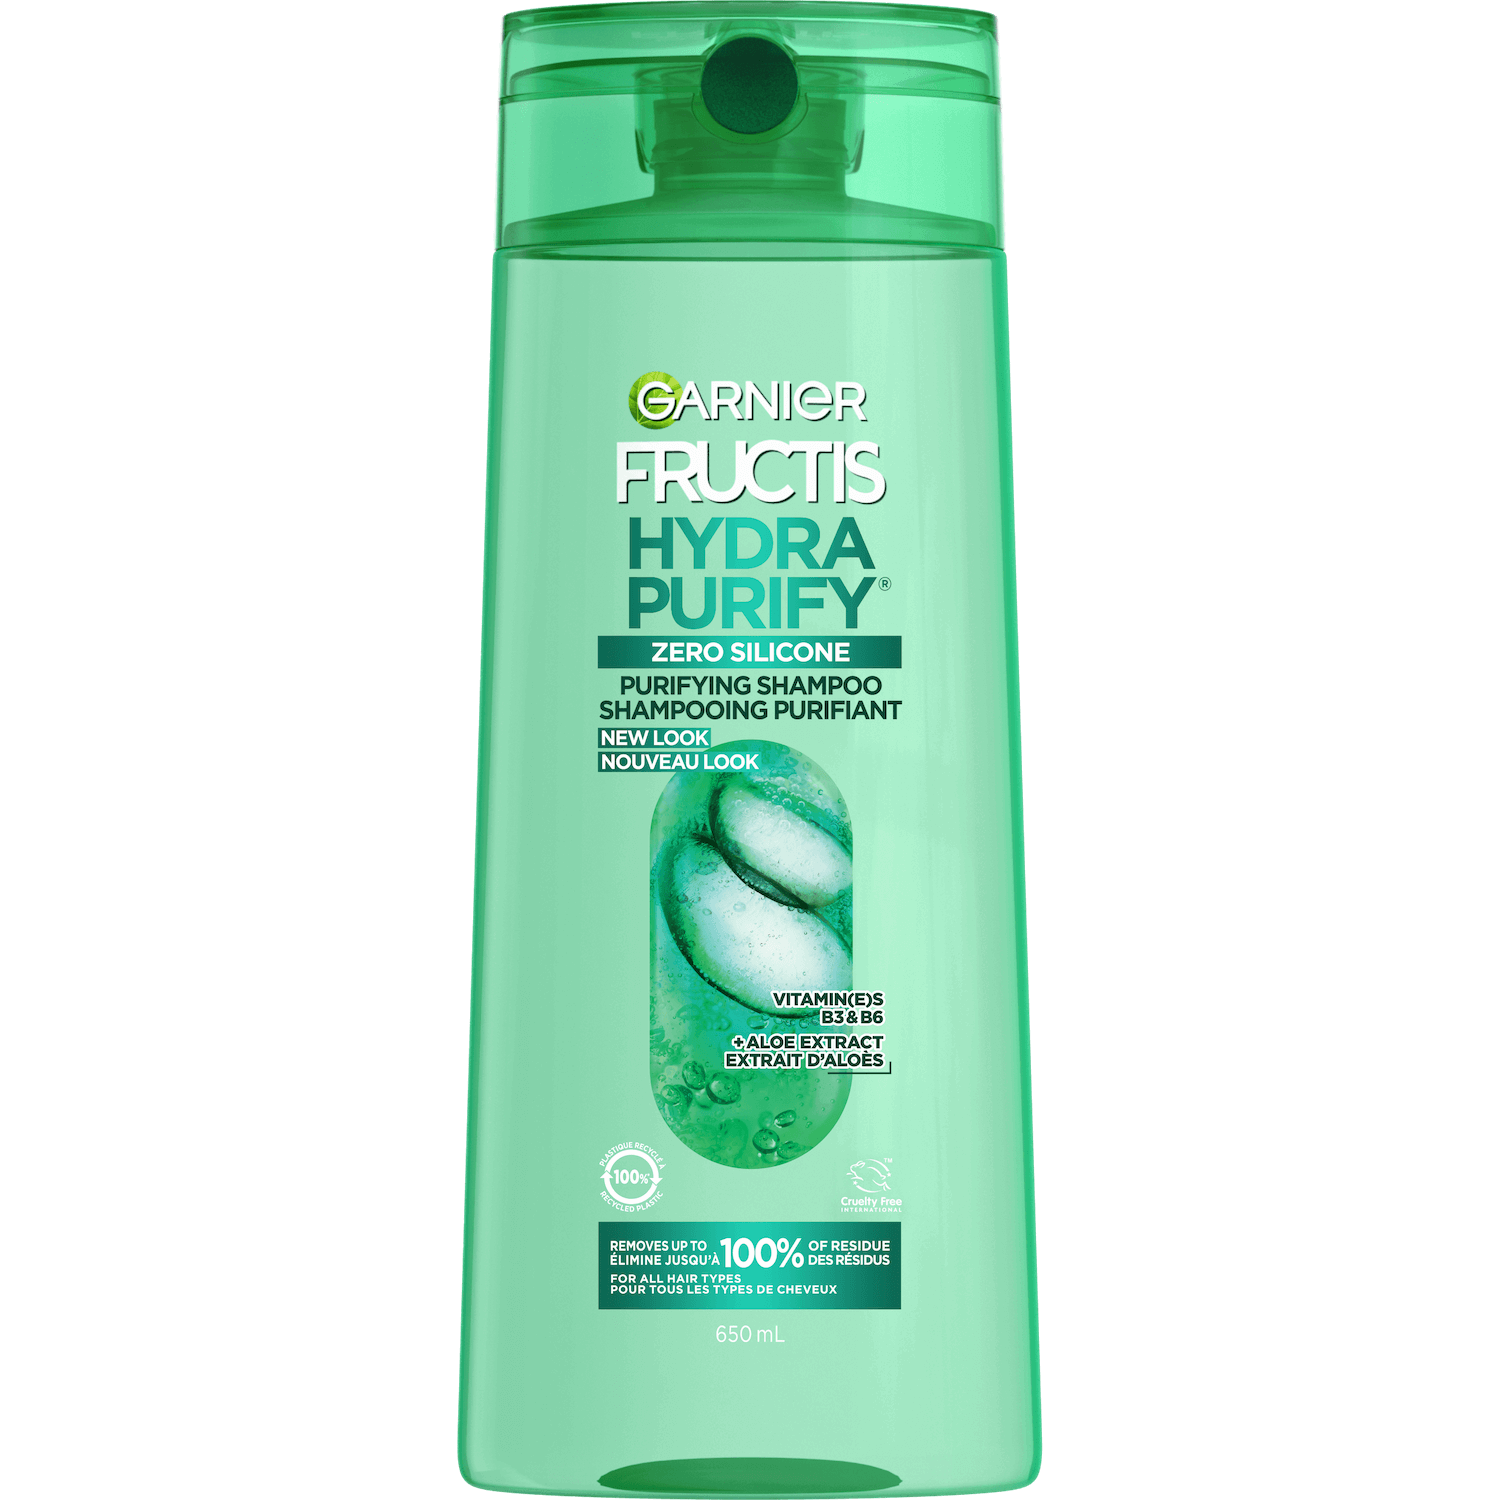 GAR 3D PKG Fructis Reno 2022 HydraPurify Shampoo Front 650mL min